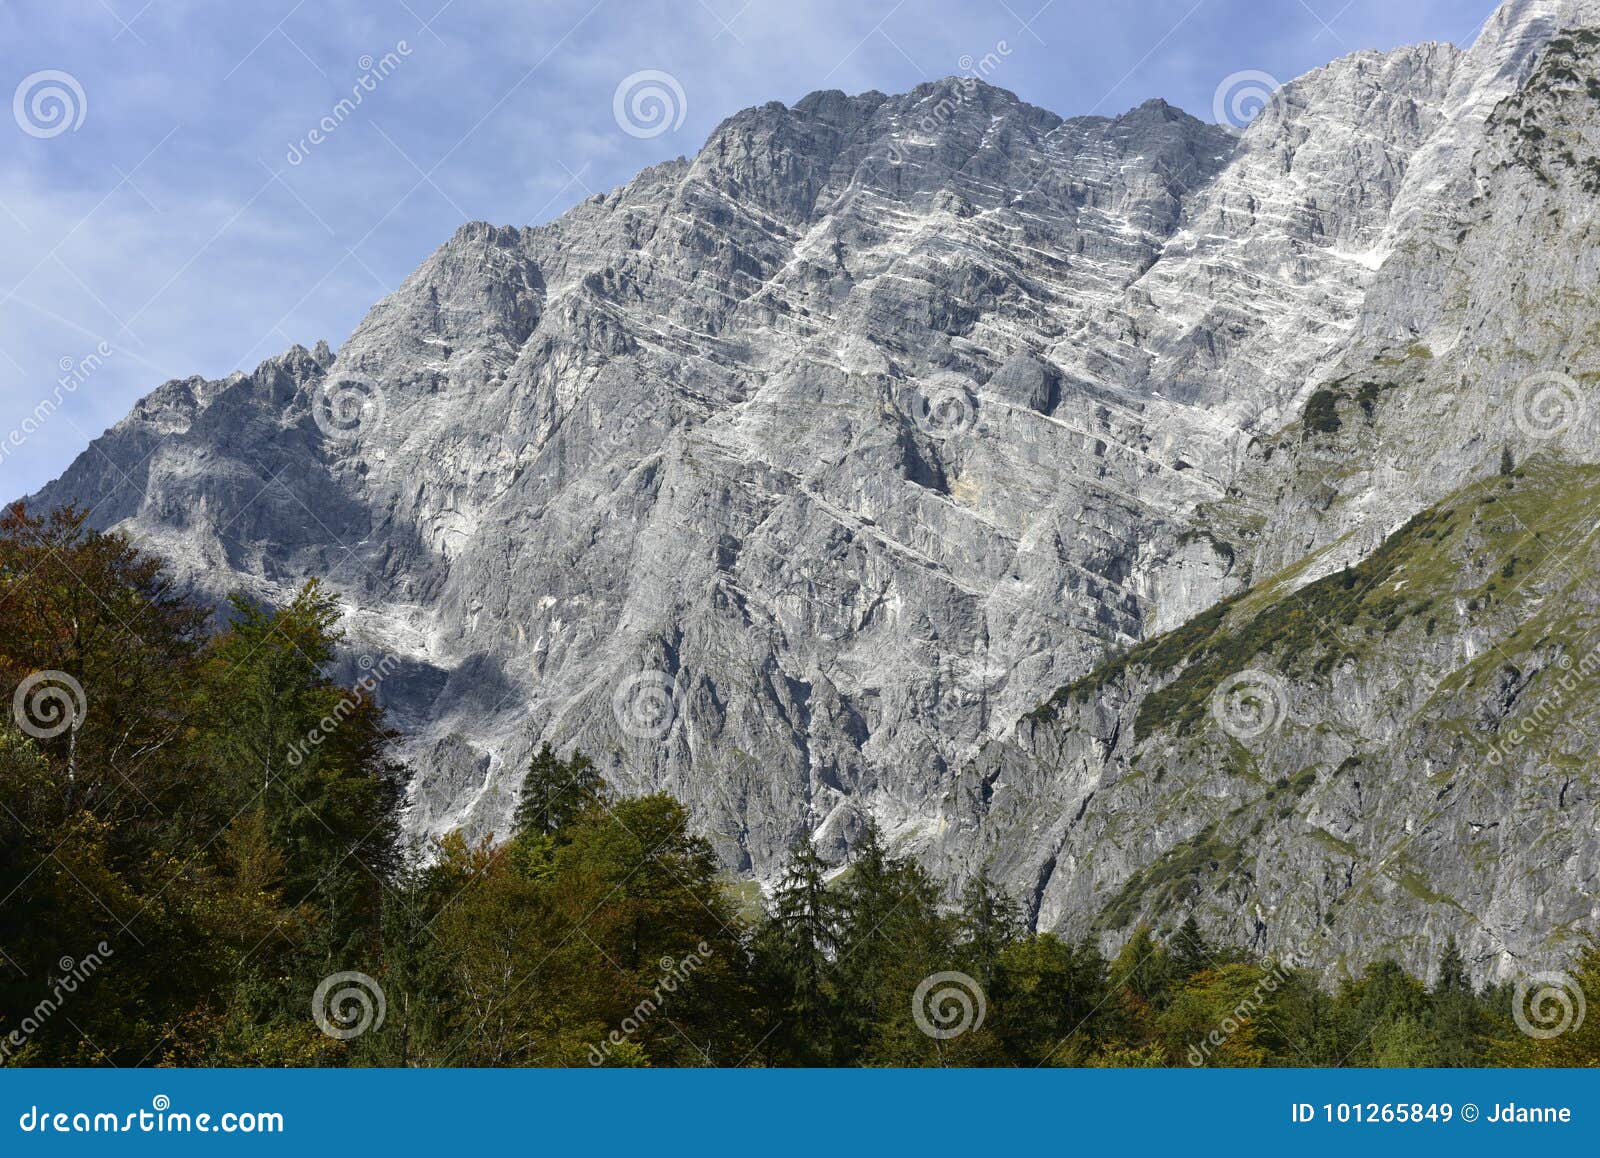 watzmann mountains near berchtesgaden, bavaria, germany